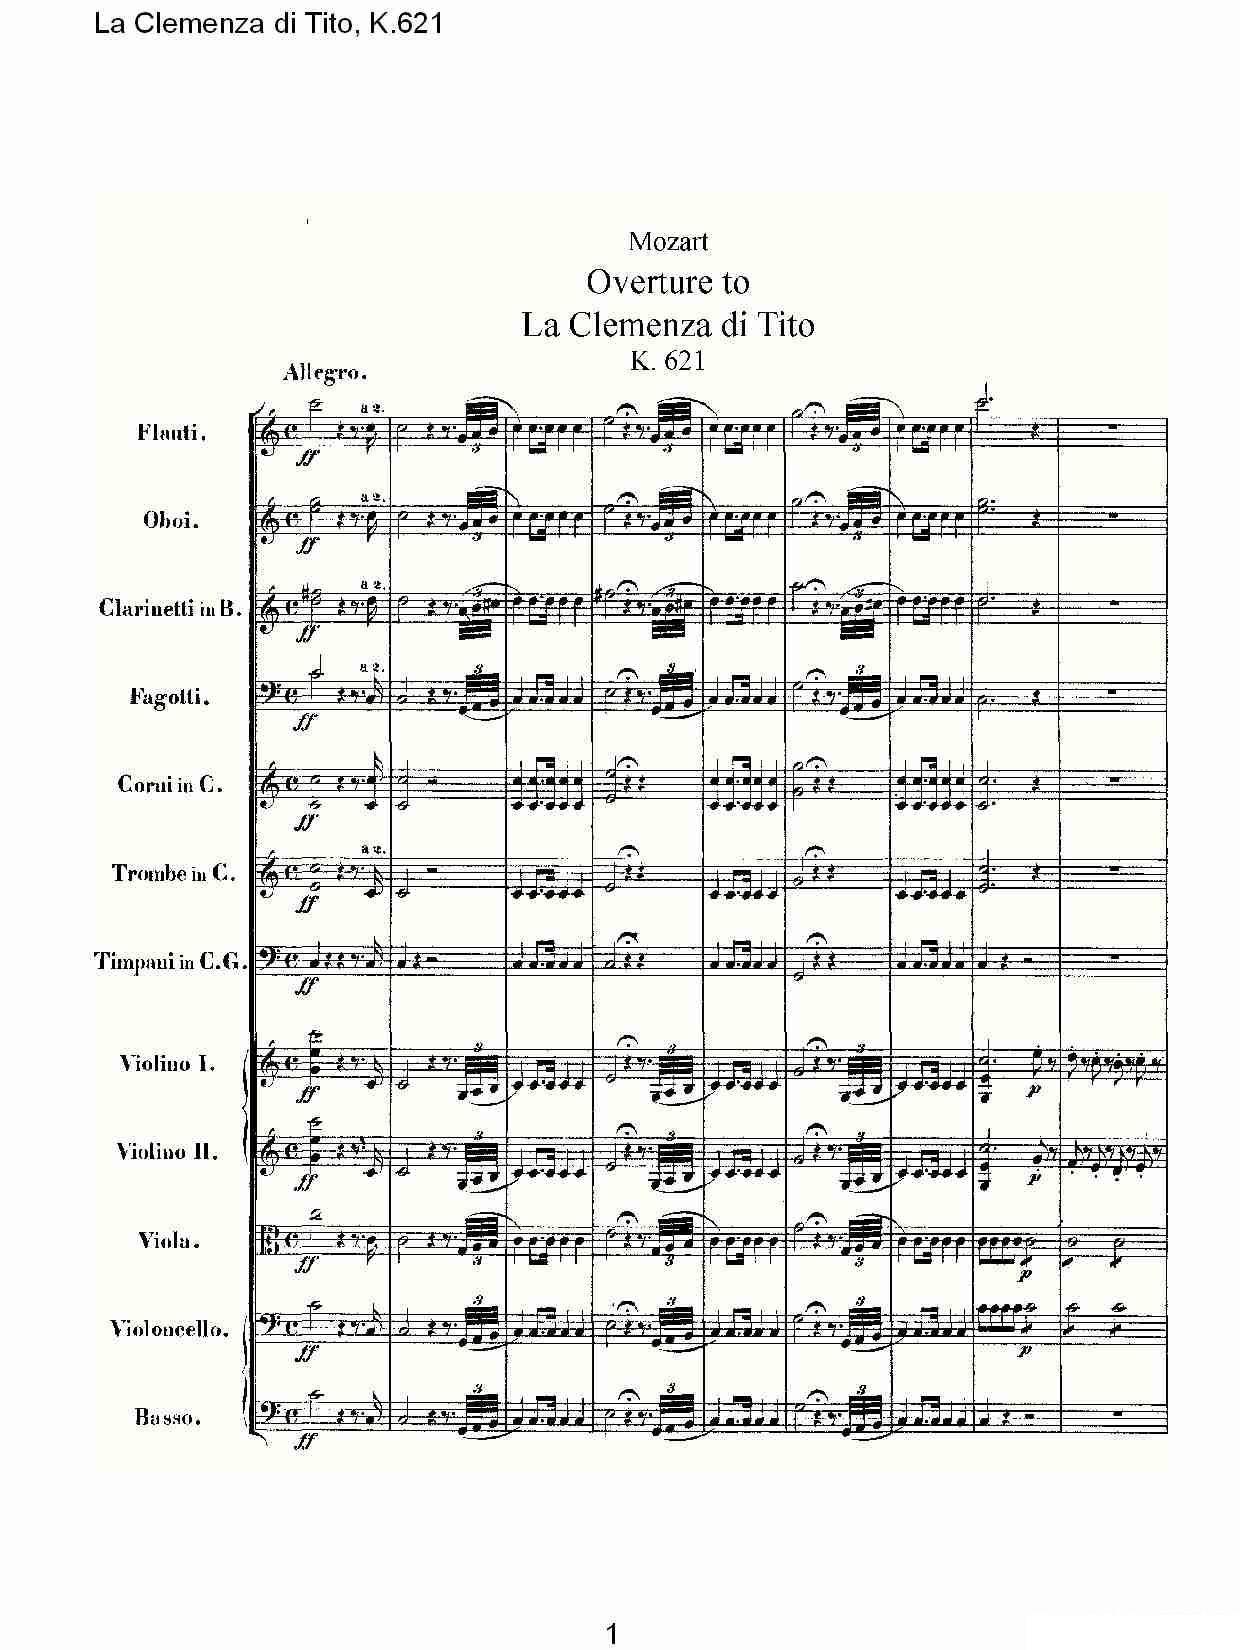 架子鼓乐谱曲谱 Overture to La Clemenza di Tiao K.621